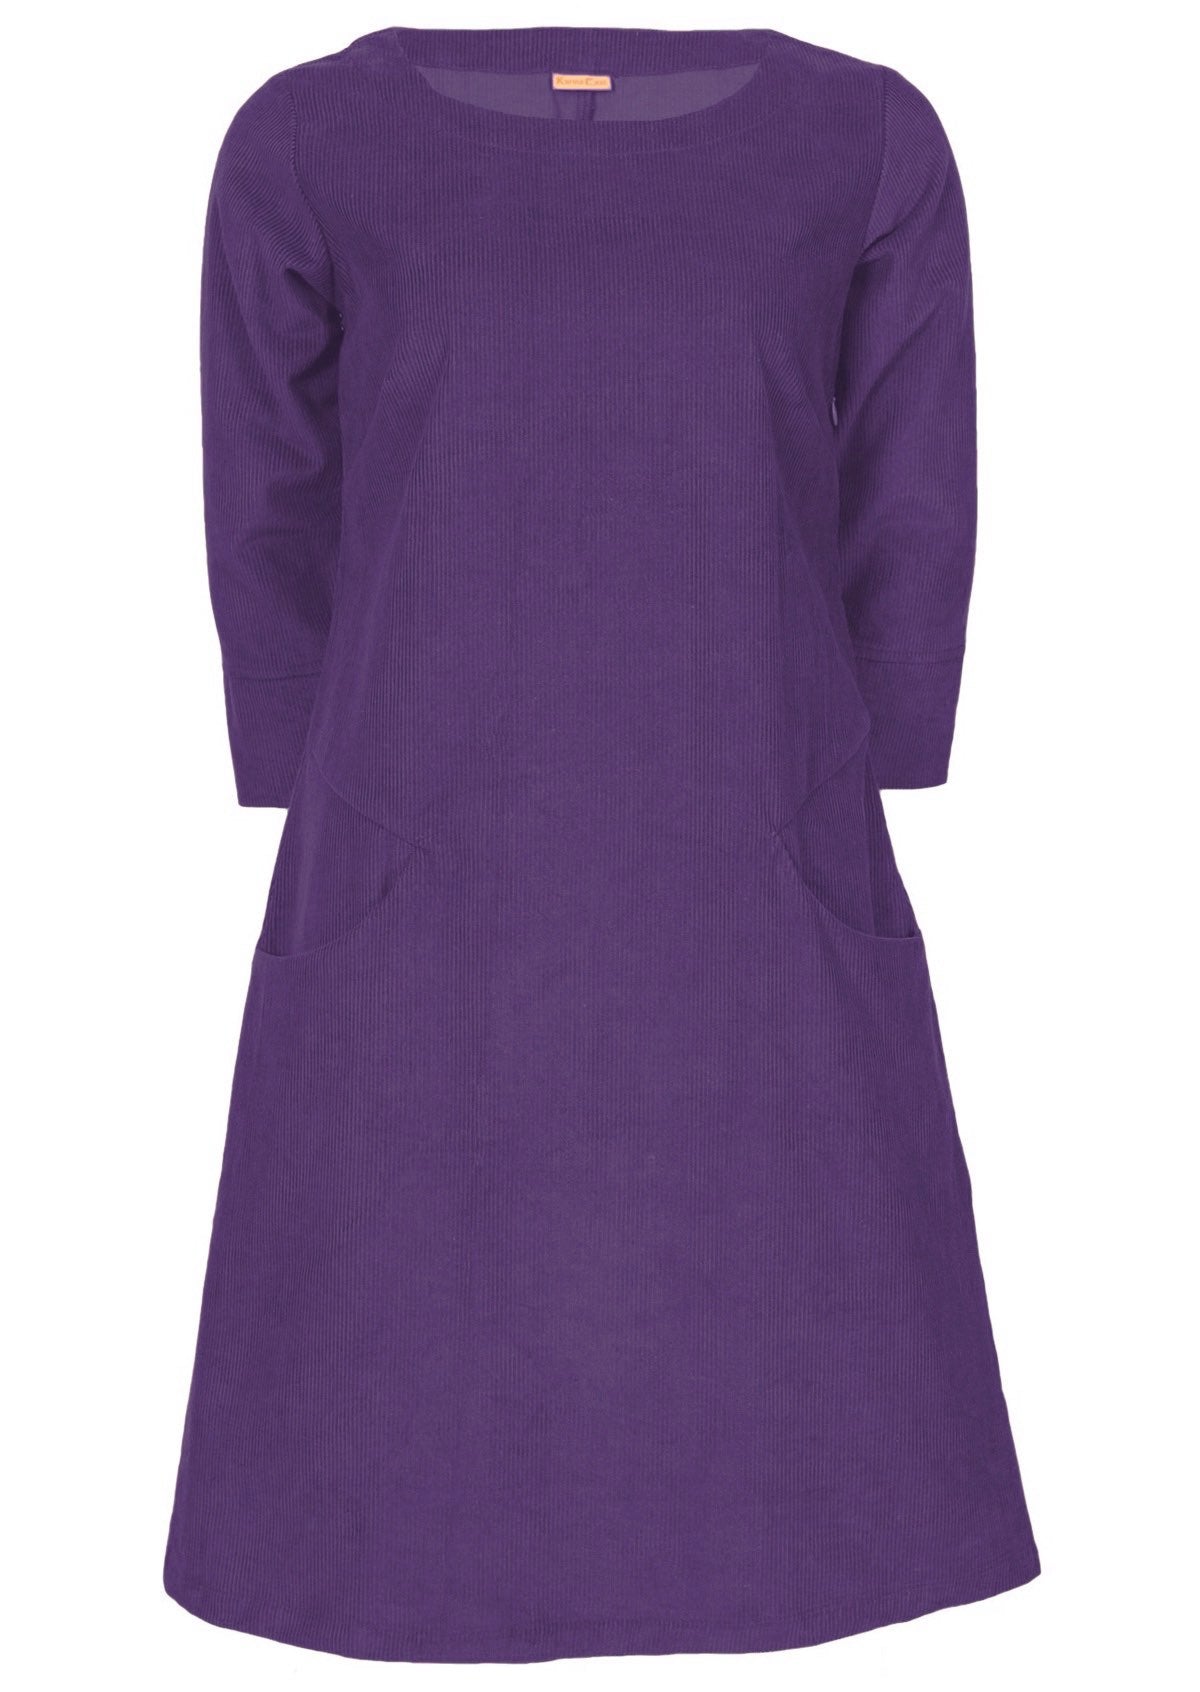 Bold purple 100% cotton corduroy dress with an a-line skirt. 